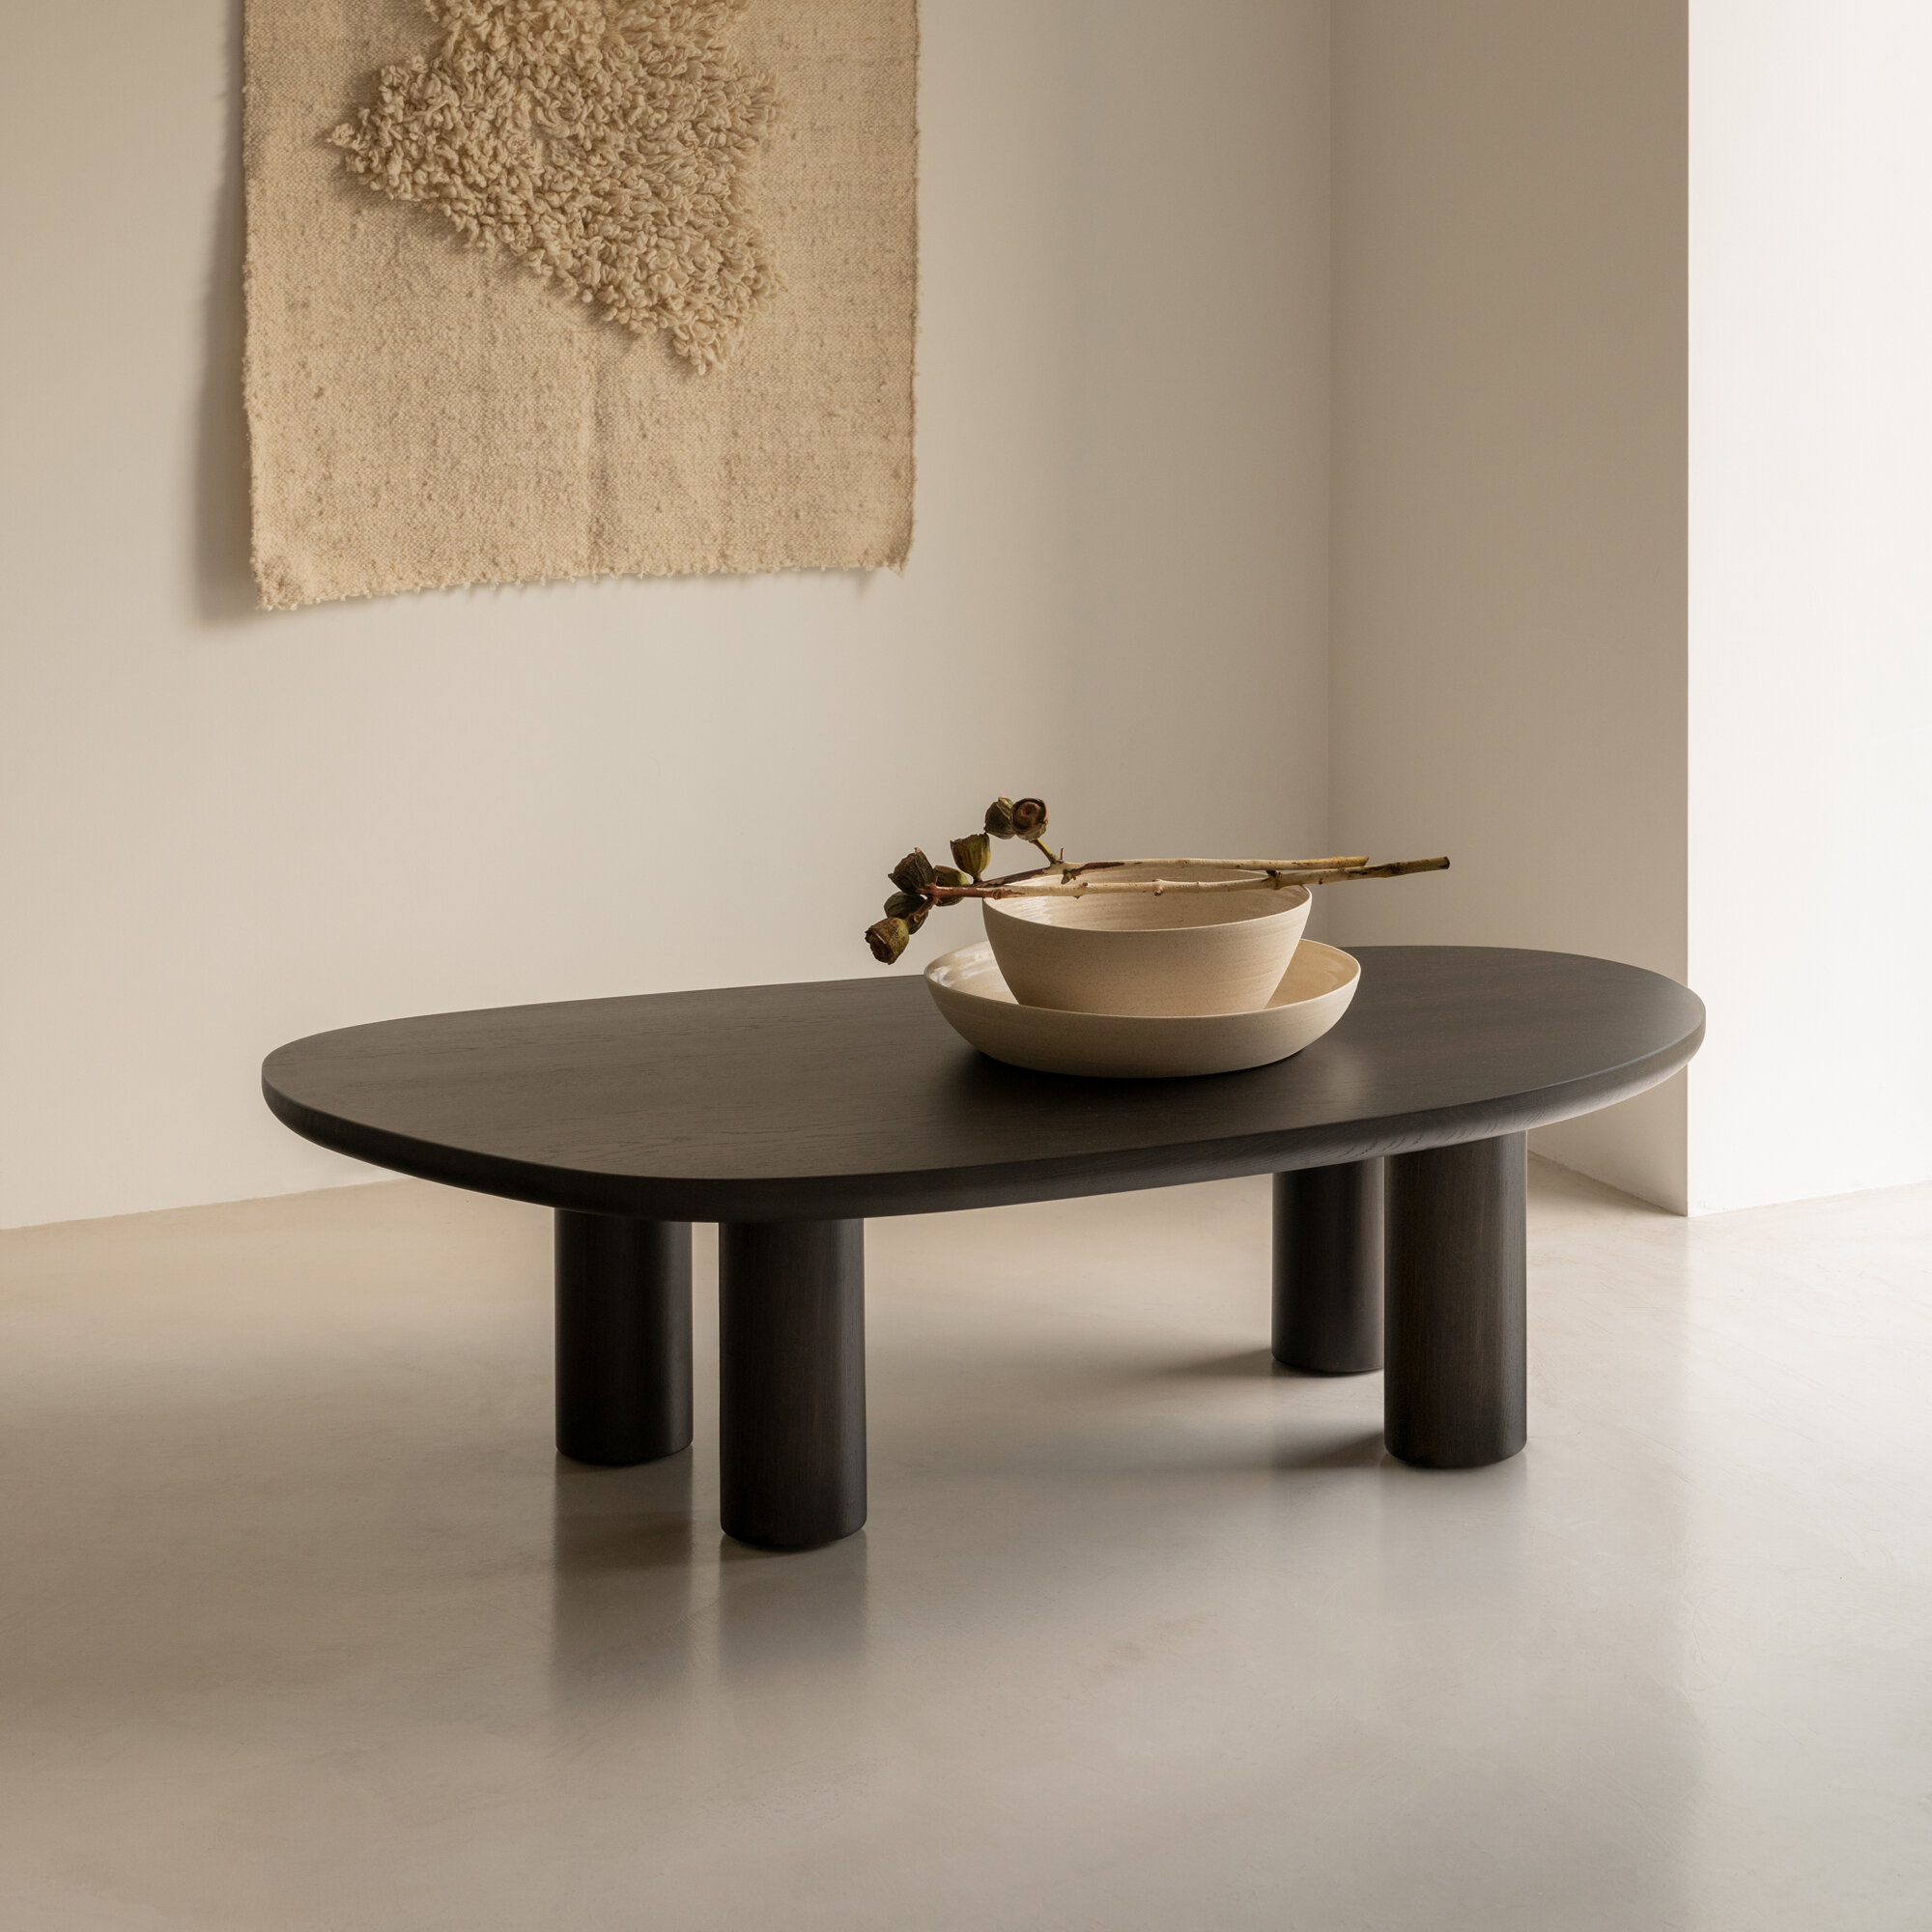 Design Coffee Table | Blob Coffee Table Oak hardwax oil natural 3062 | Oak hardwax oil natural 3062 | Studio HENK| 